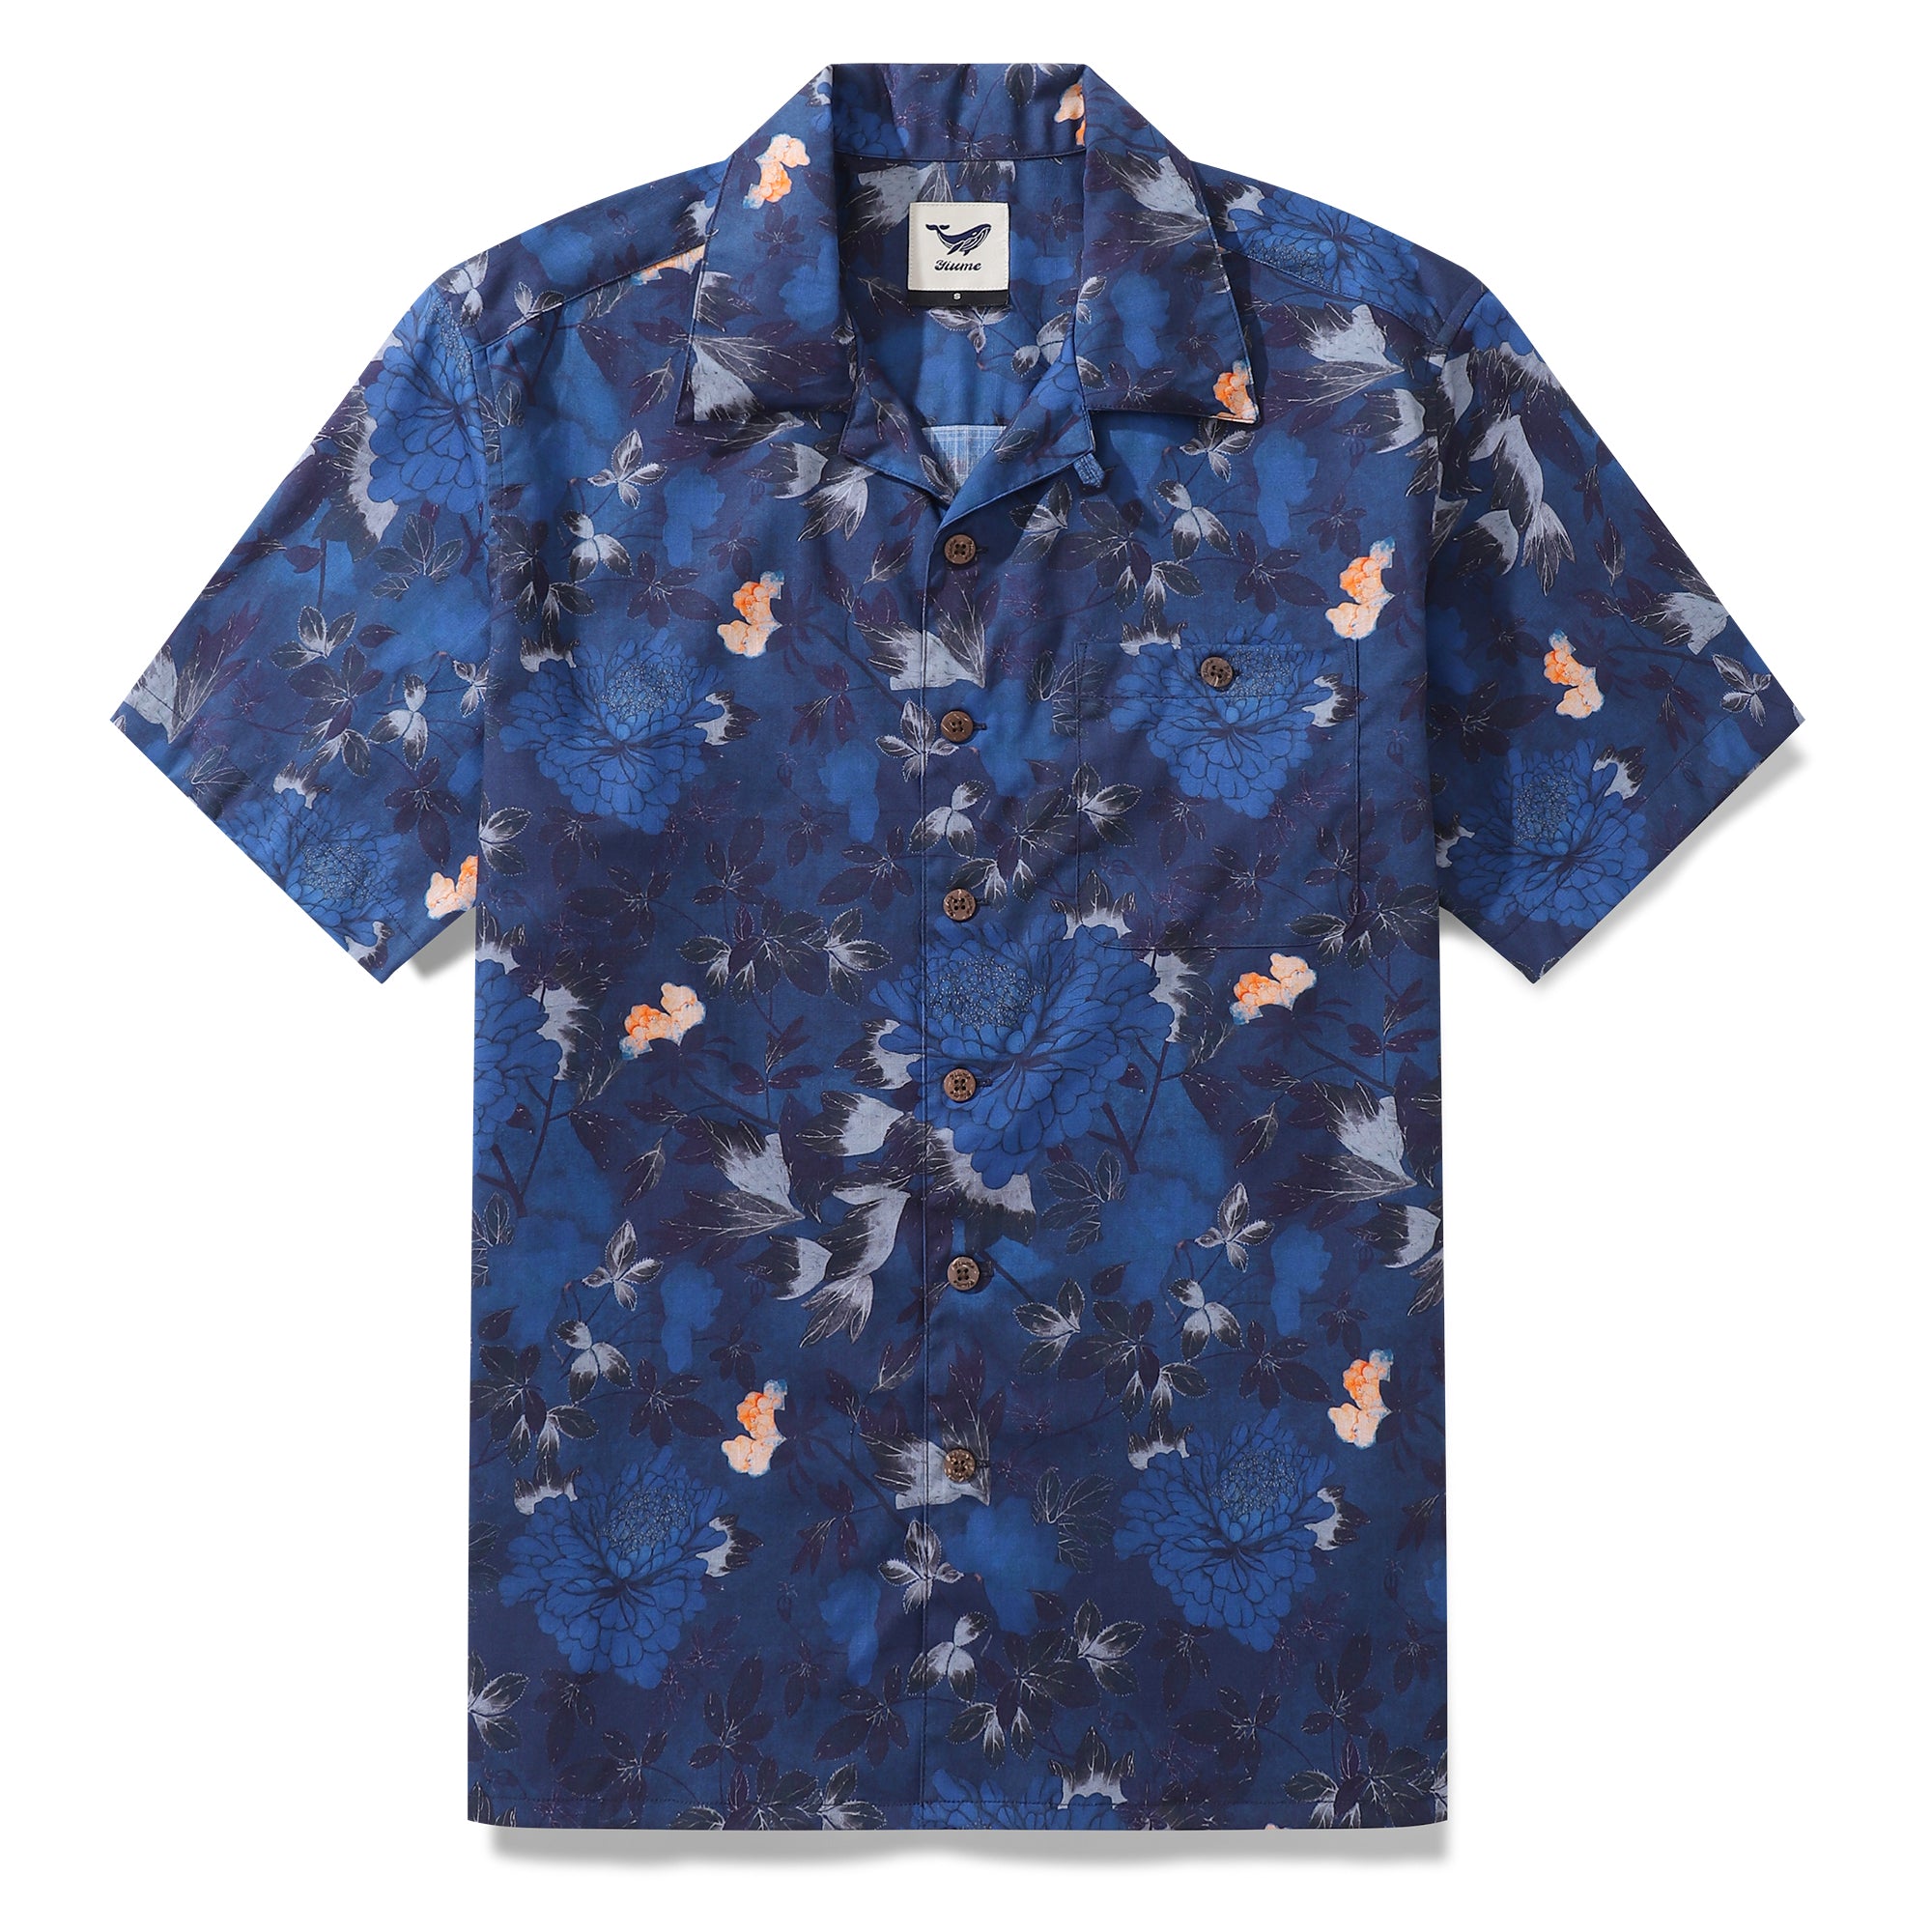 Dark Blue Hawaiian Shirt For Men Peony Shirt Camp Collar 100% Cotton Shirt